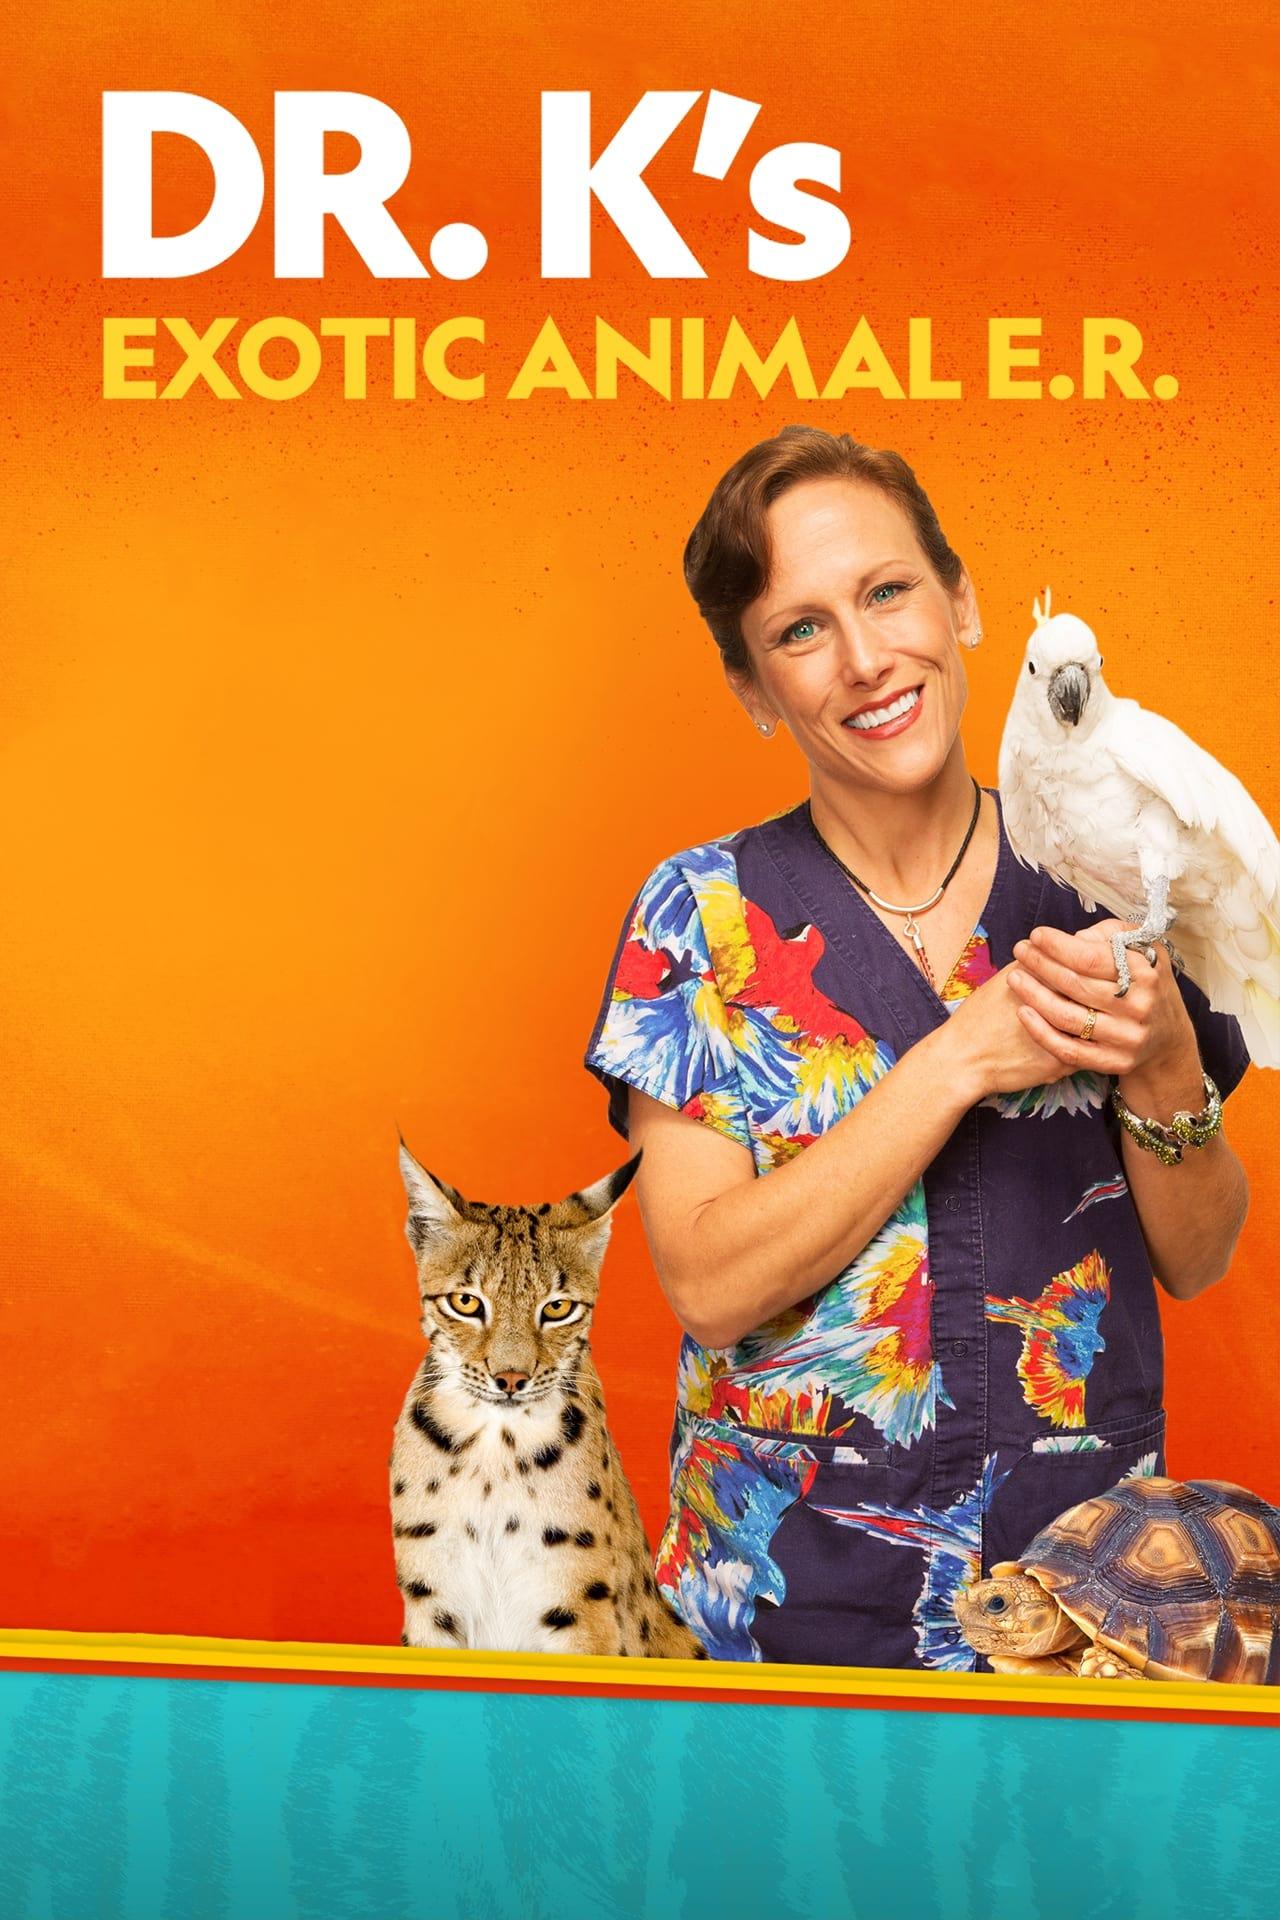 Dr. K's Exotic Animal ER poster